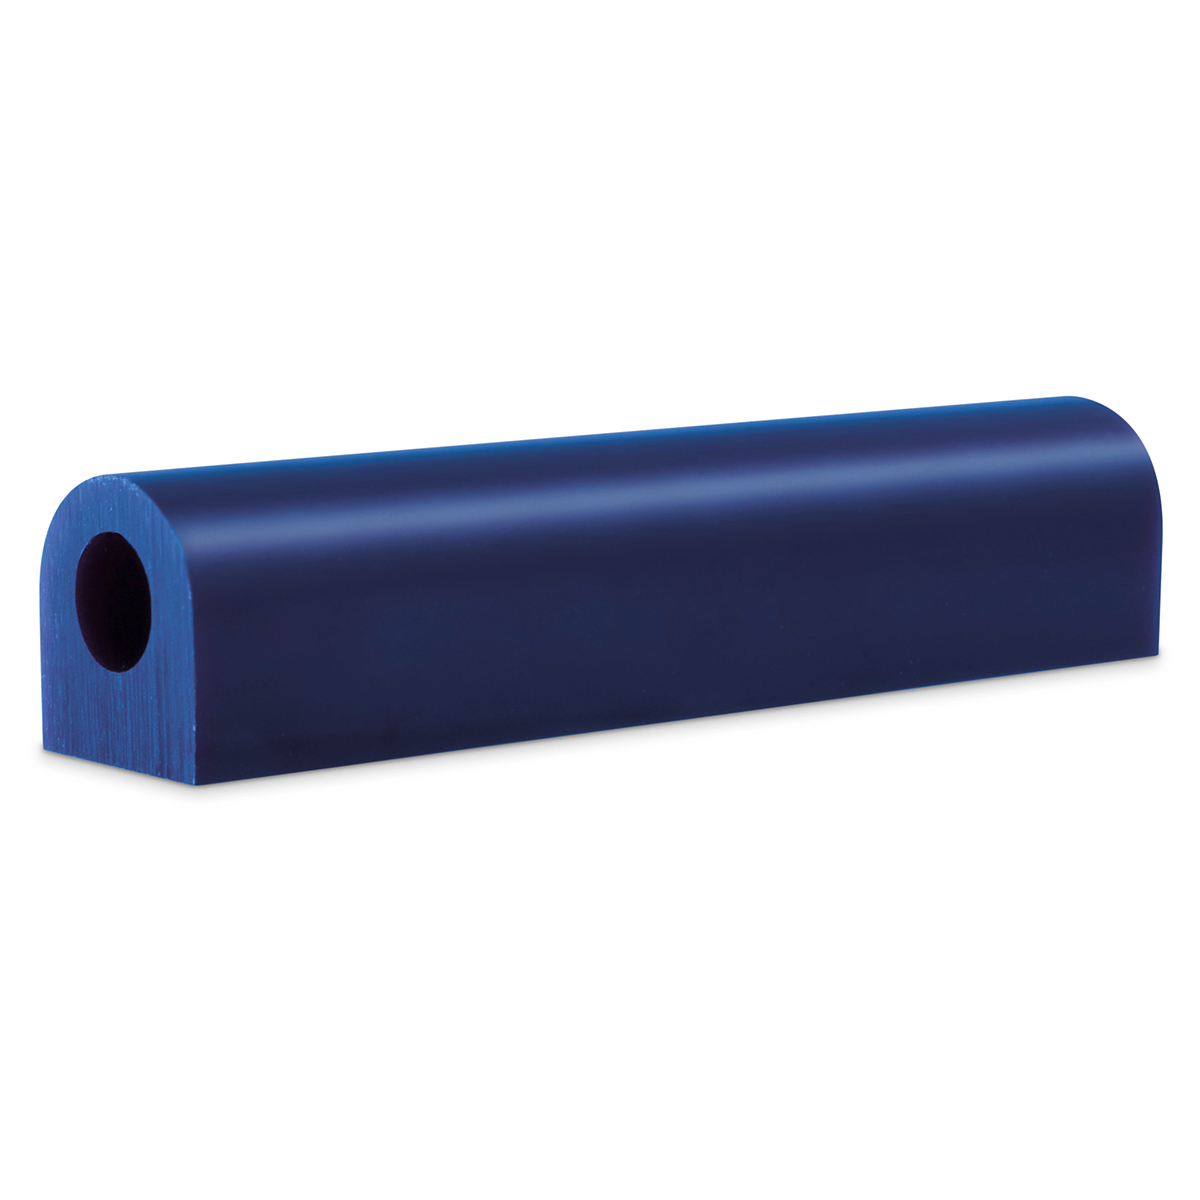 Carving wax tube, 25 x 27 mm, one flat side, blue, medium